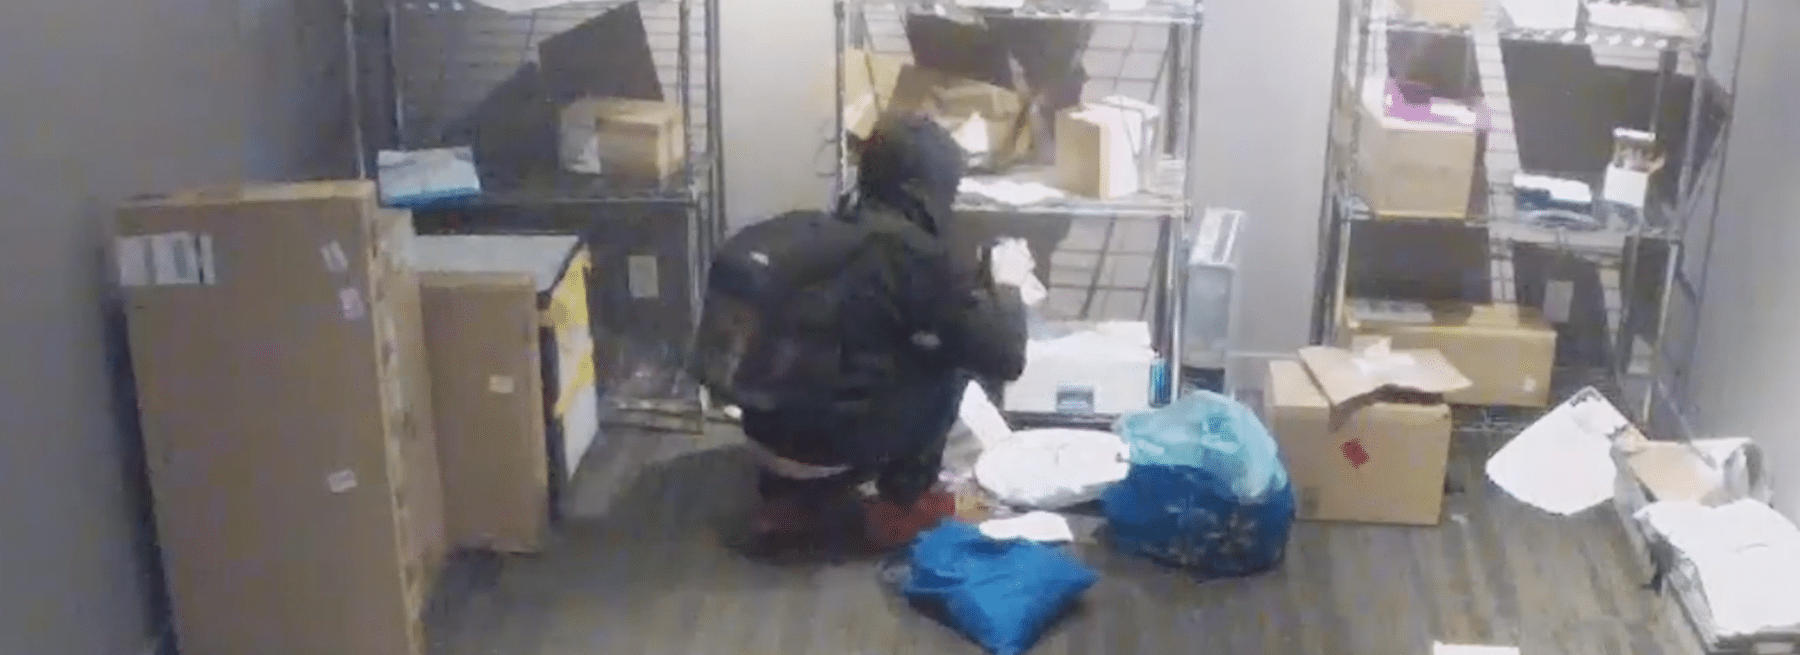 Man raiding apartment mailroom